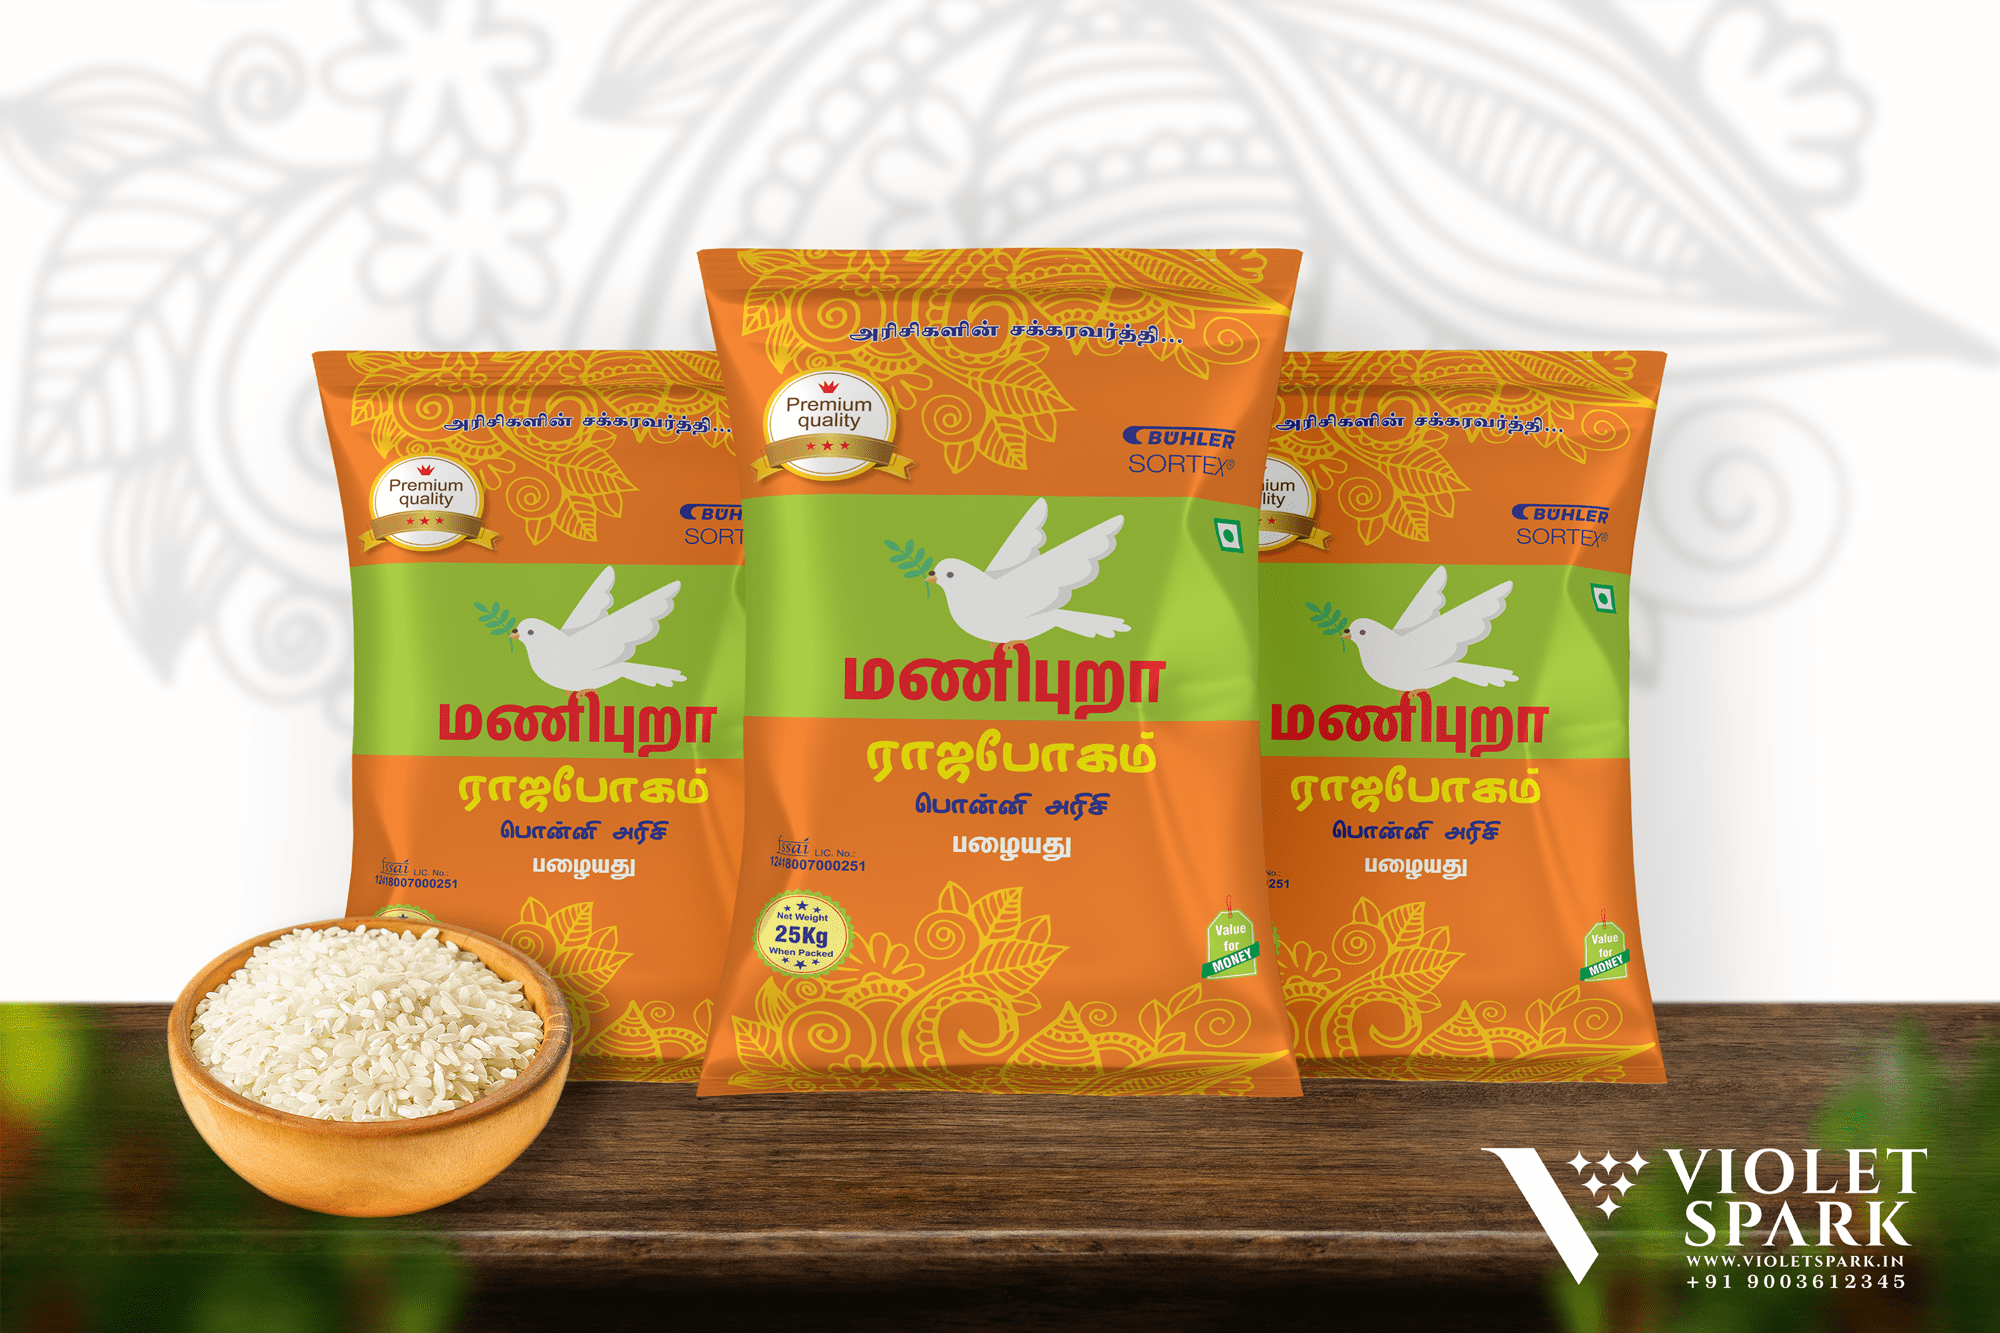 Manipura Brand Rajabhogam Rice Bags Branding & Packaging Design in Chennai by Creative Prints thecreativeprints